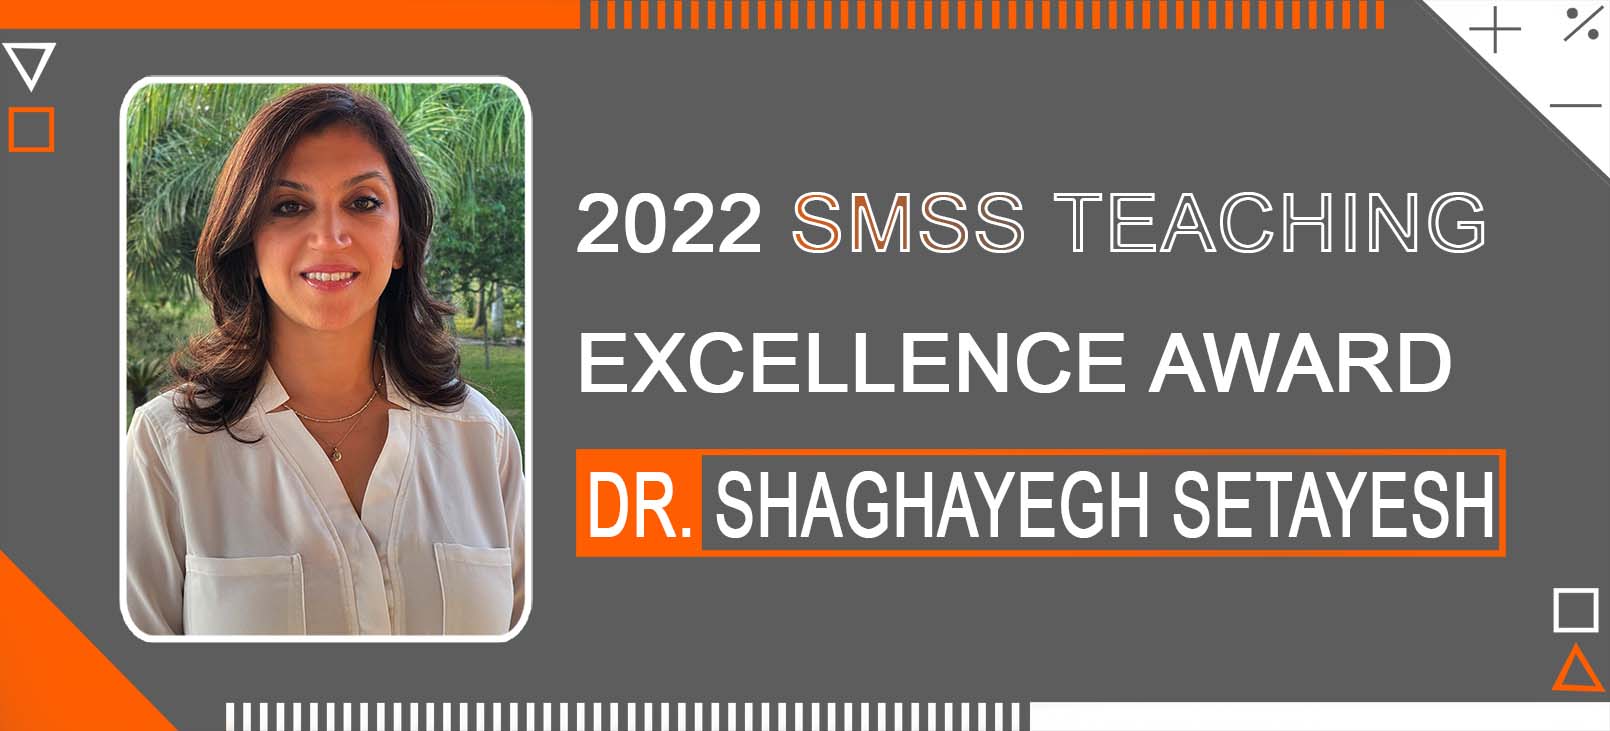 2022 SMSS Teaching Excellence Award -- Dr. Shaghayegh Setayesh